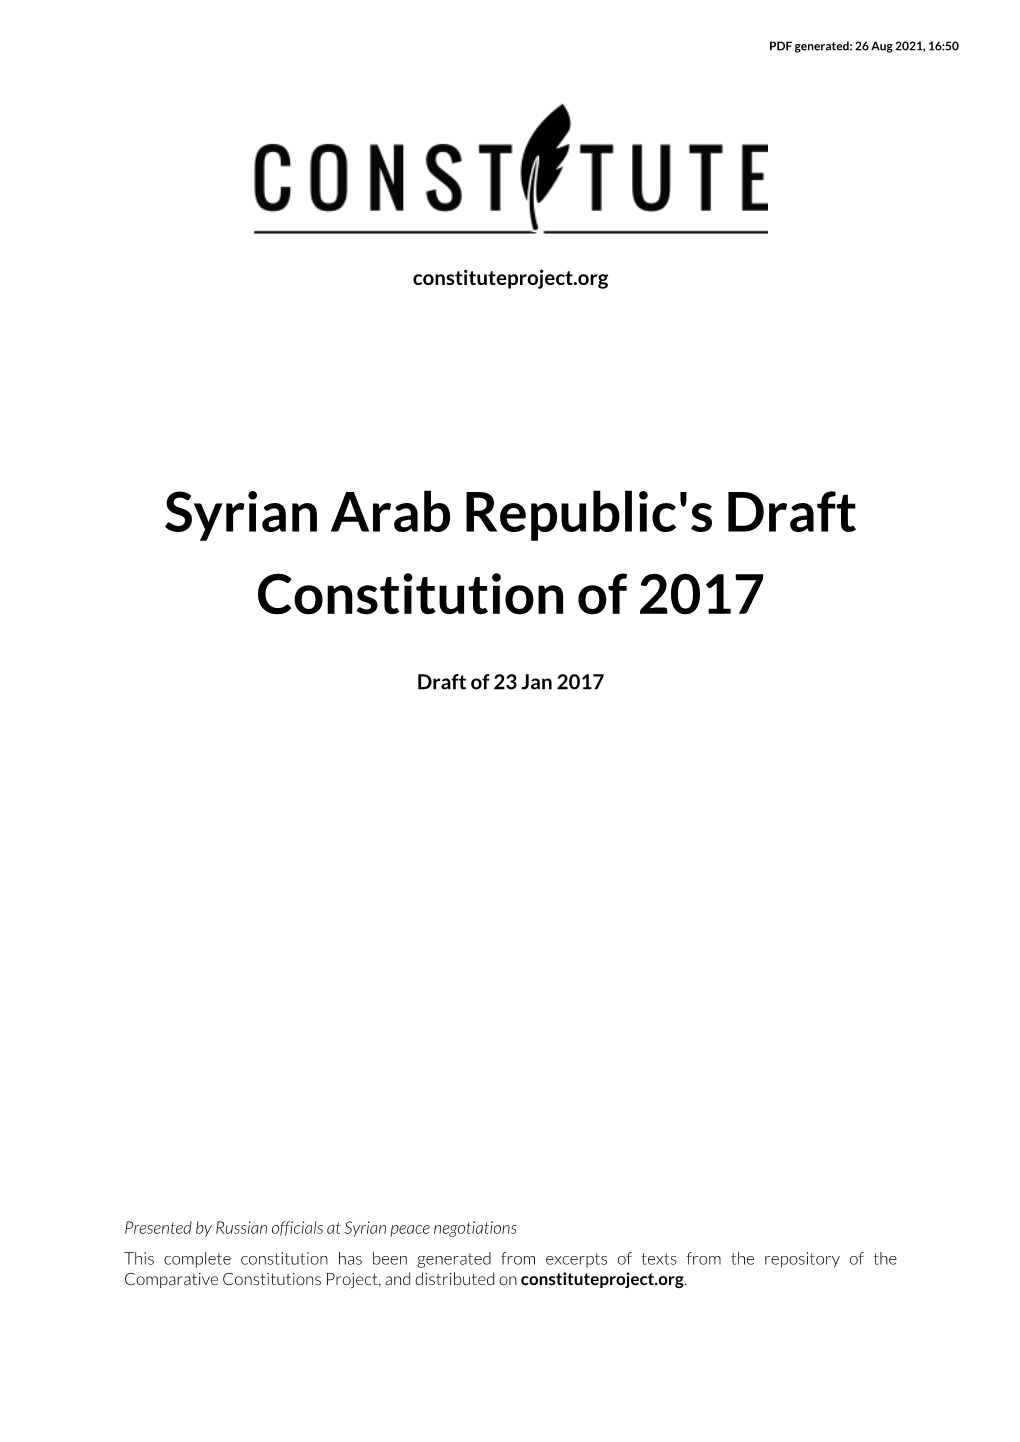 Syrian Arab Republic's Draft Constitution of 2017